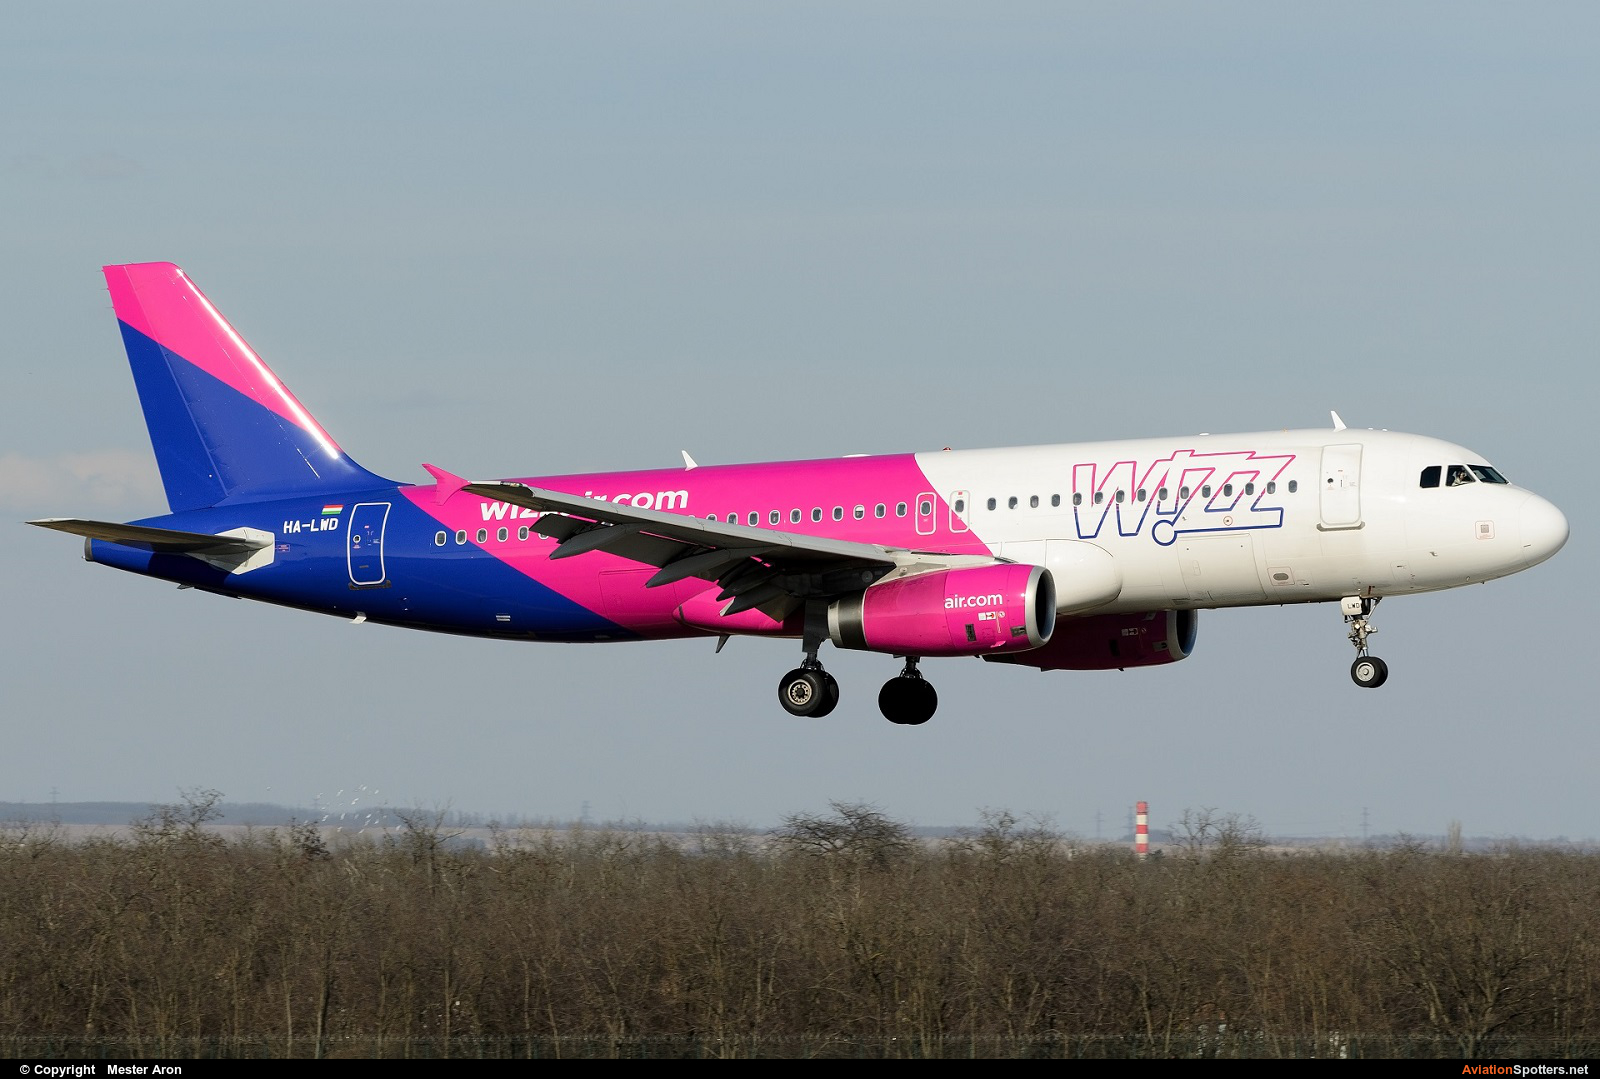 Wizz Air  -  A320  (HA-LWD) By Mester Aron (MesterAron)